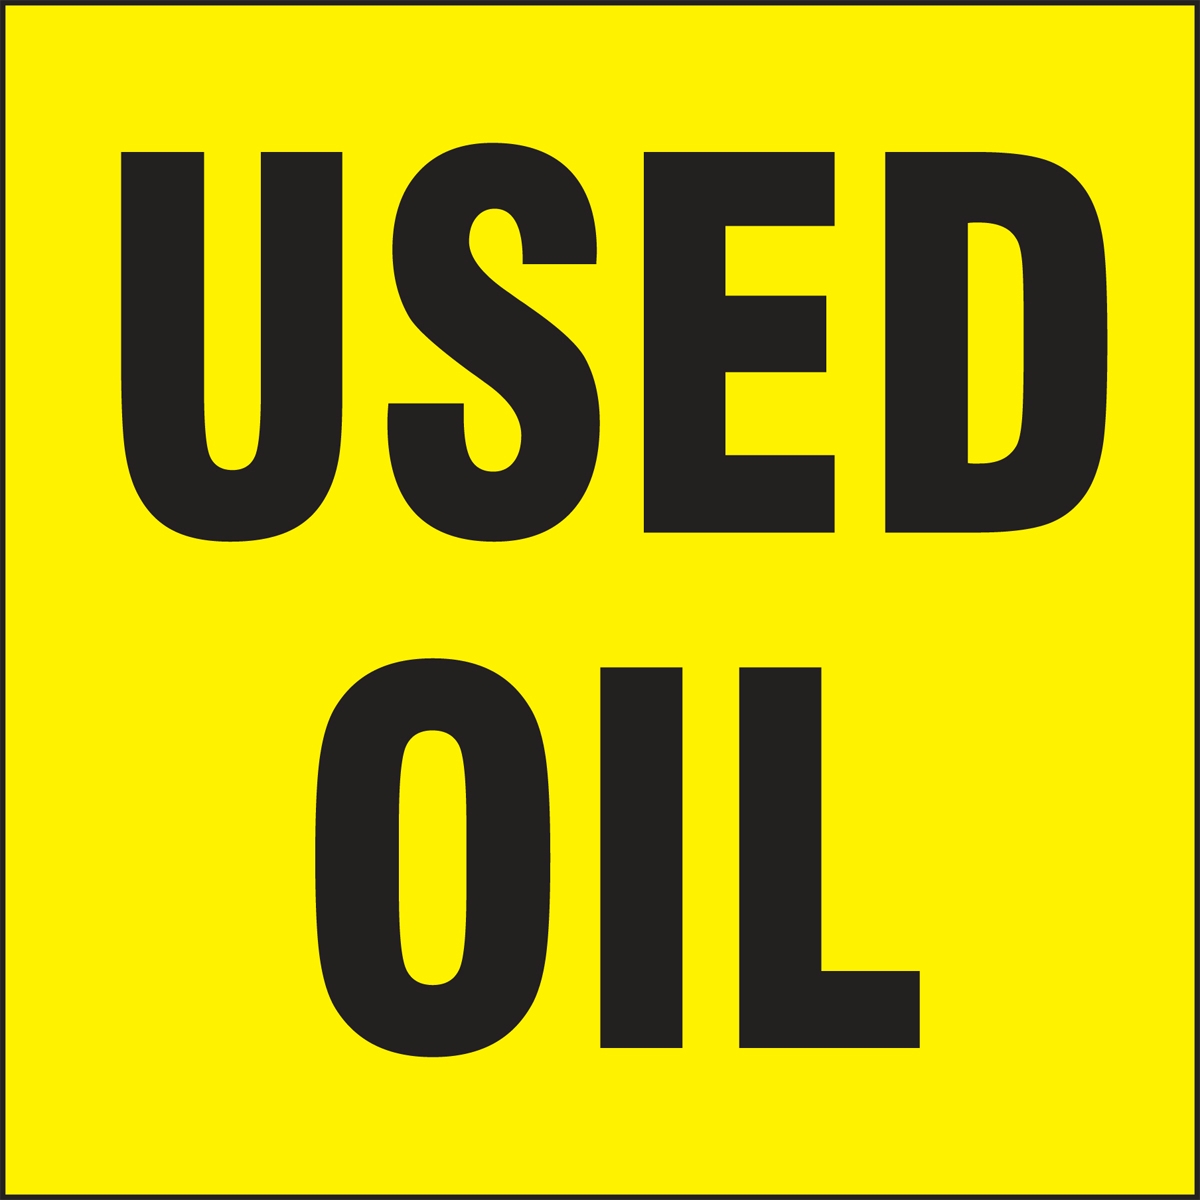 Safety Label, Legend: USED OIL